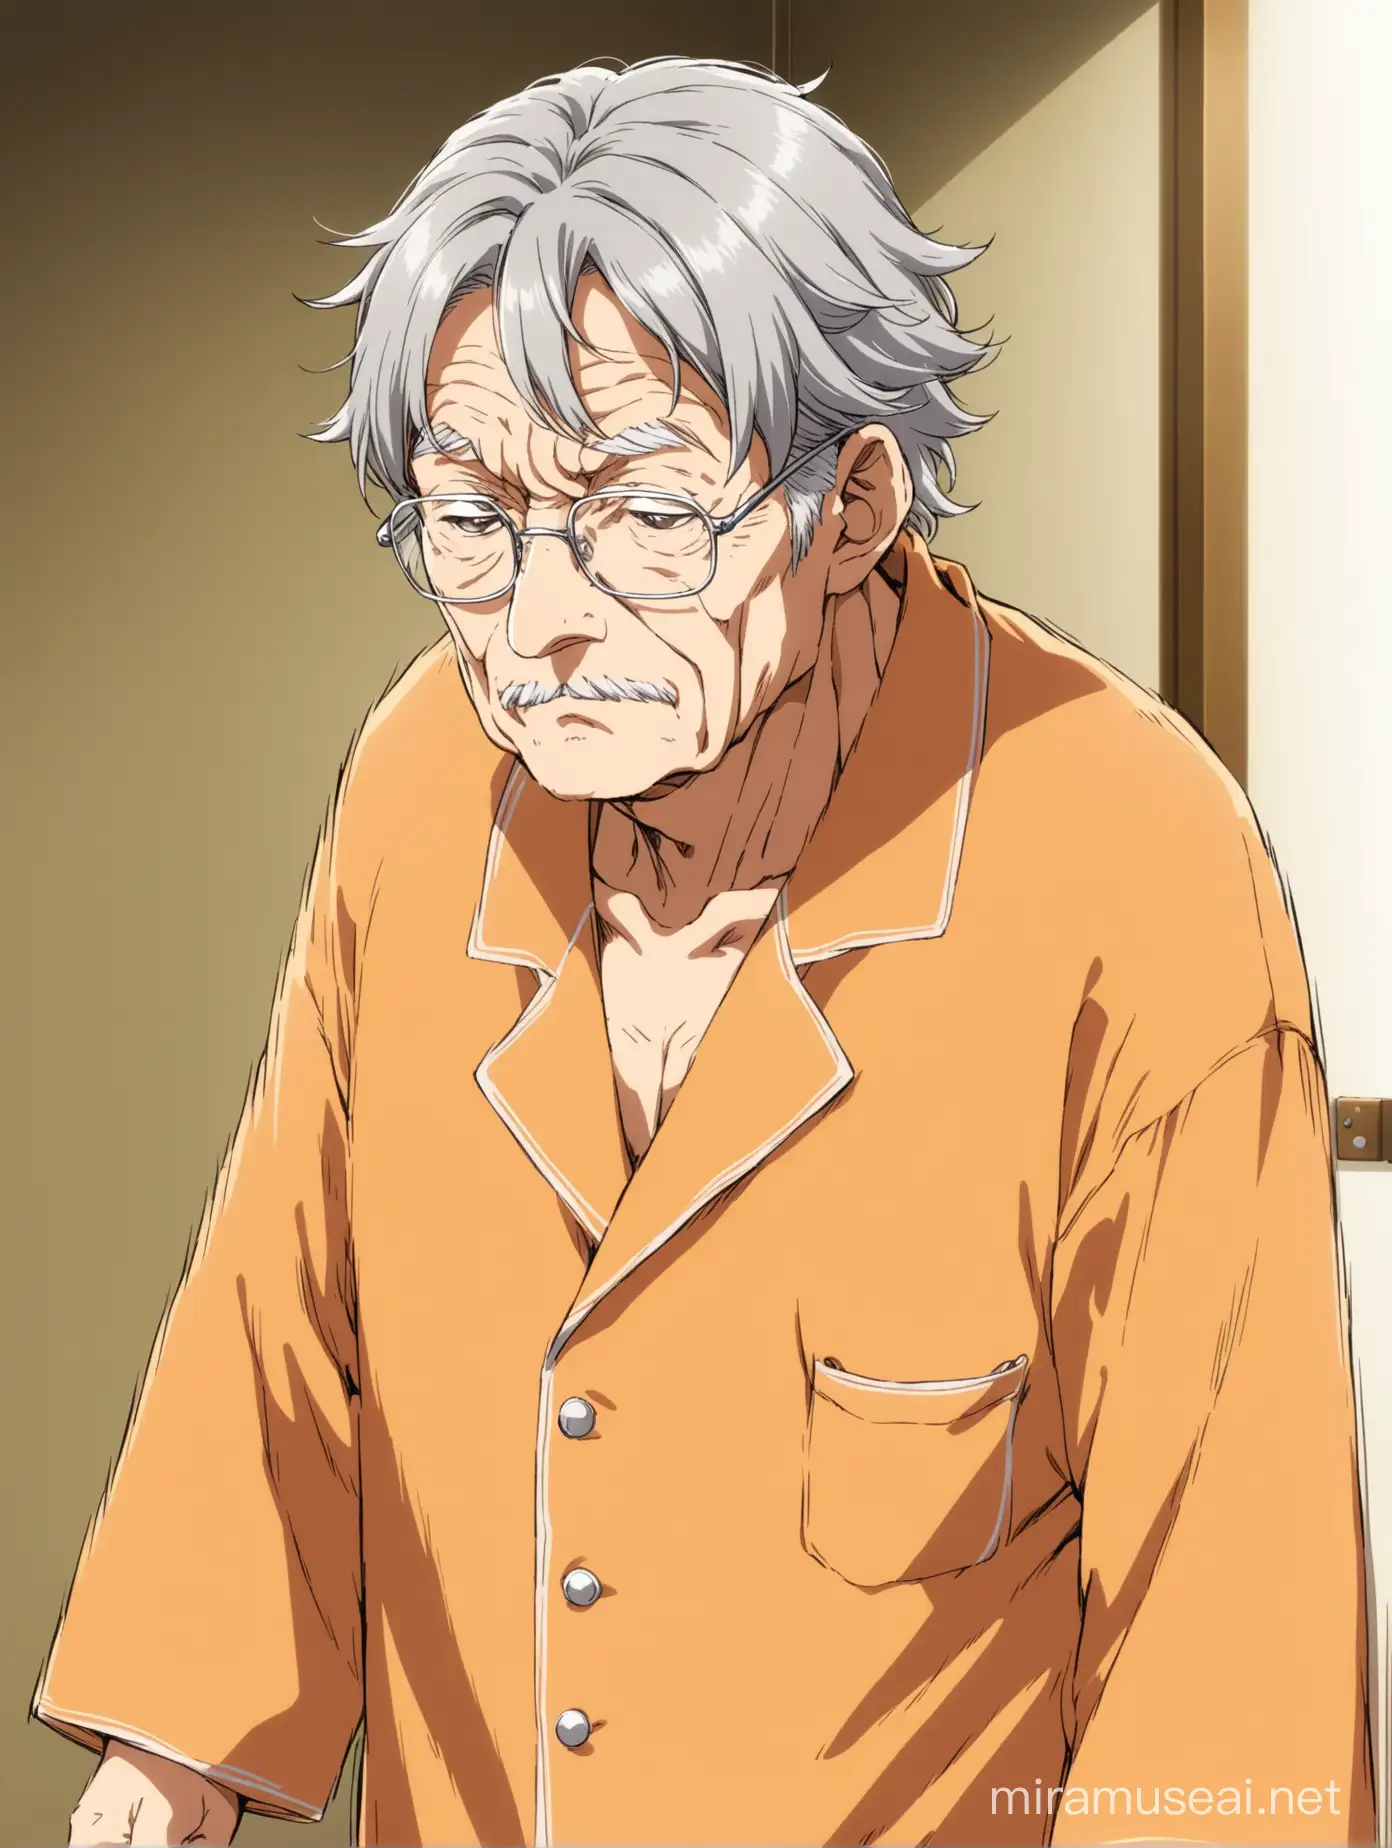 Anime, Old wrinkled man, with wavy gray hair, wearing light orange pajamas, wearing silver glasses.